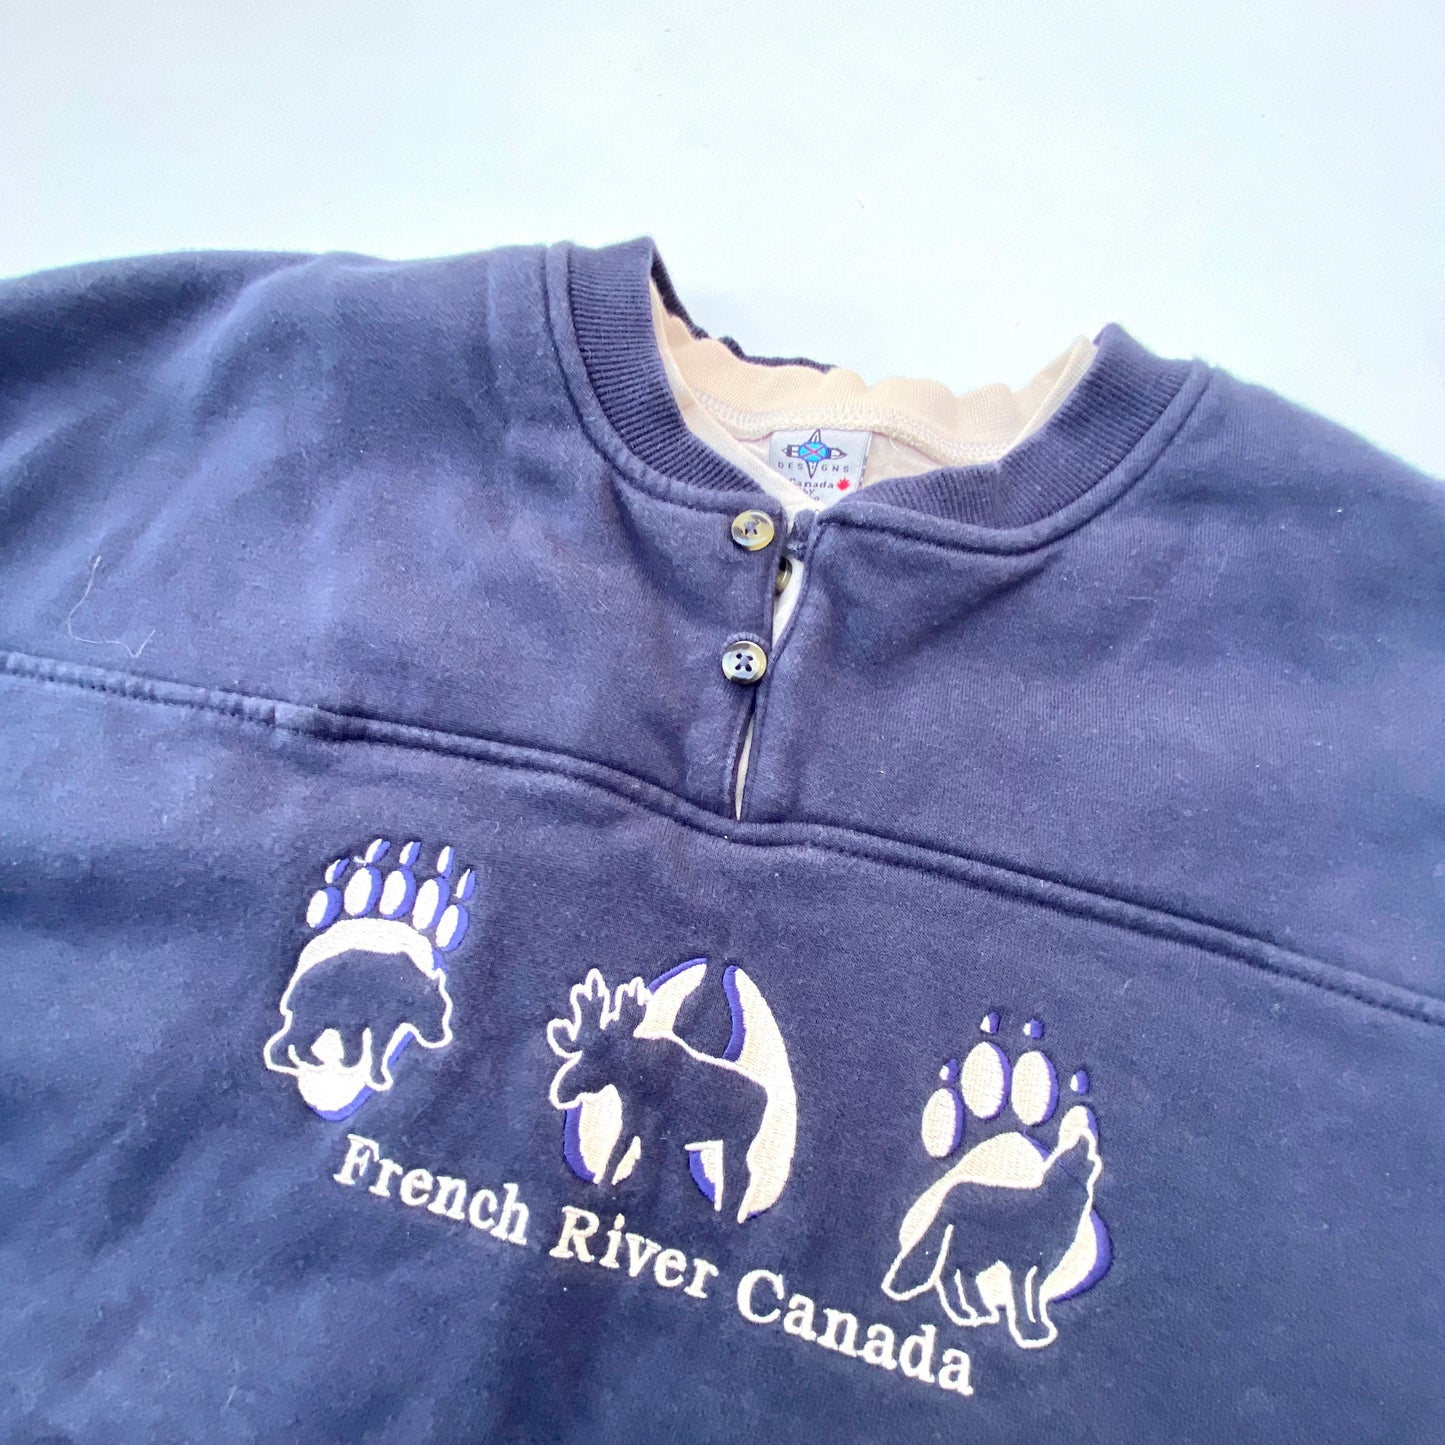 Vintage French River Canada Sweatshirt